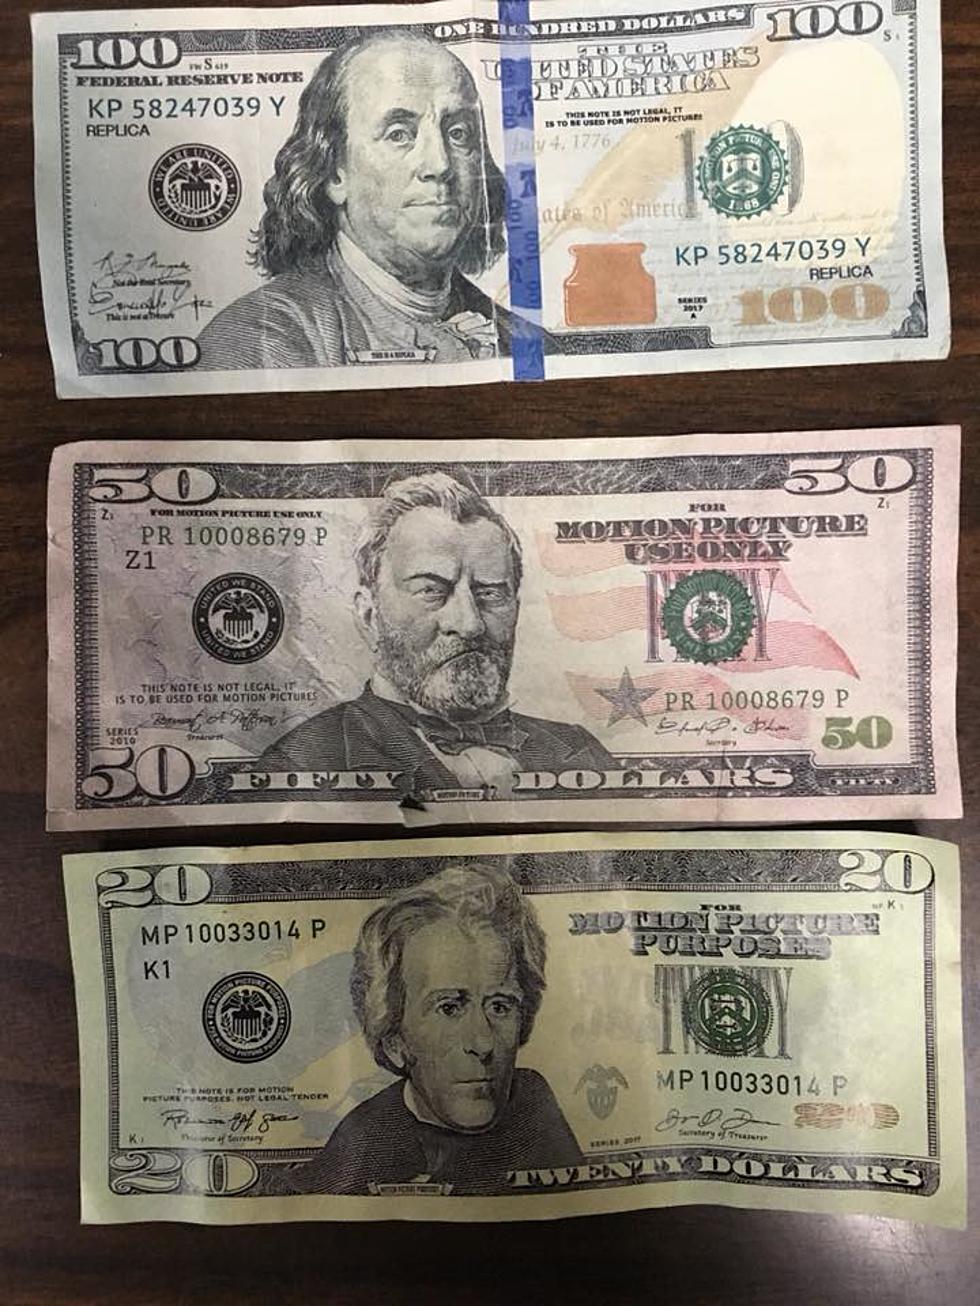 Fake $50 Bill In Battle Creek Makes U.S. Grant Look Like The Rock